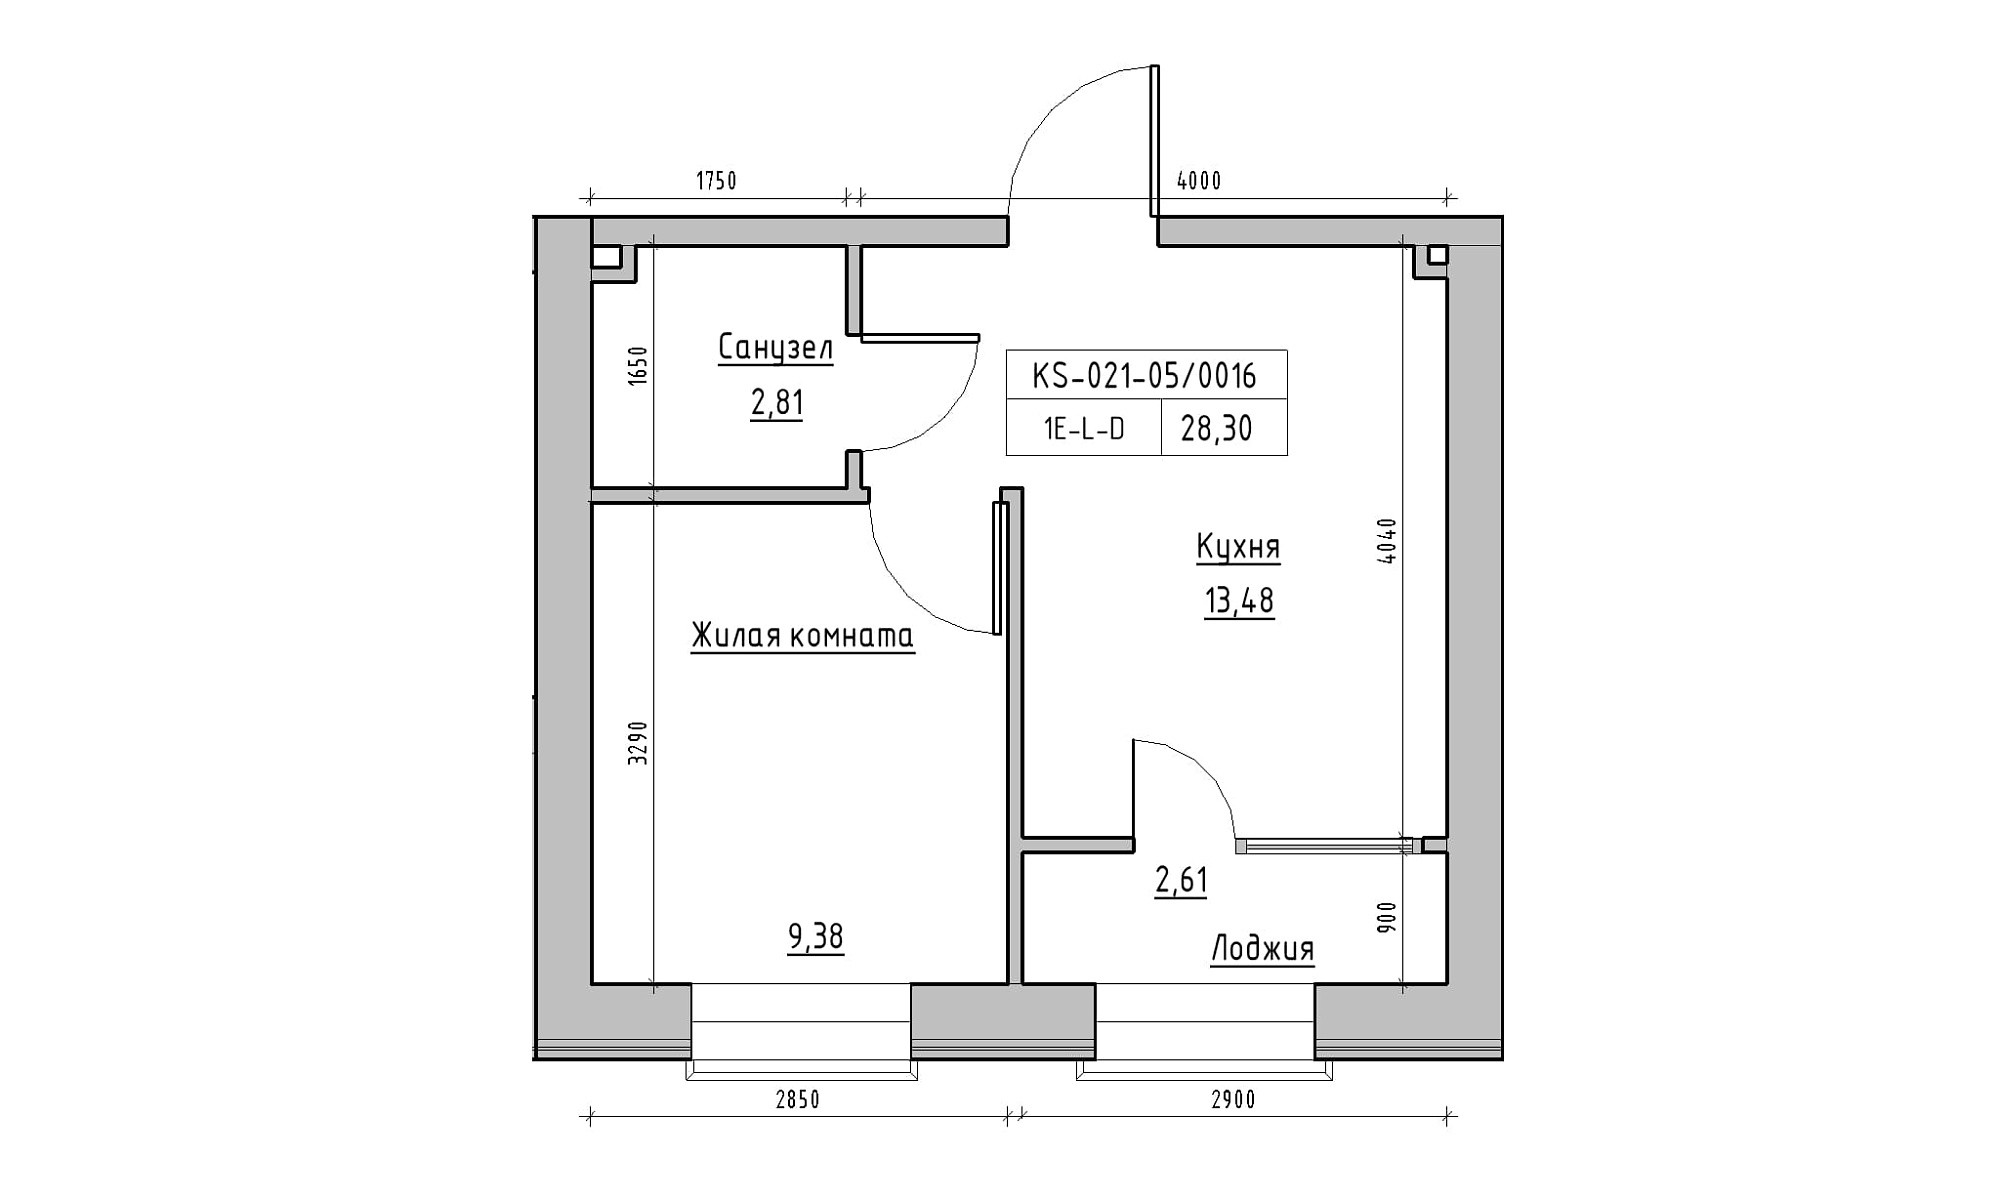 Planning 1-rm flats area 28.3m2, KS-021-05/0016.